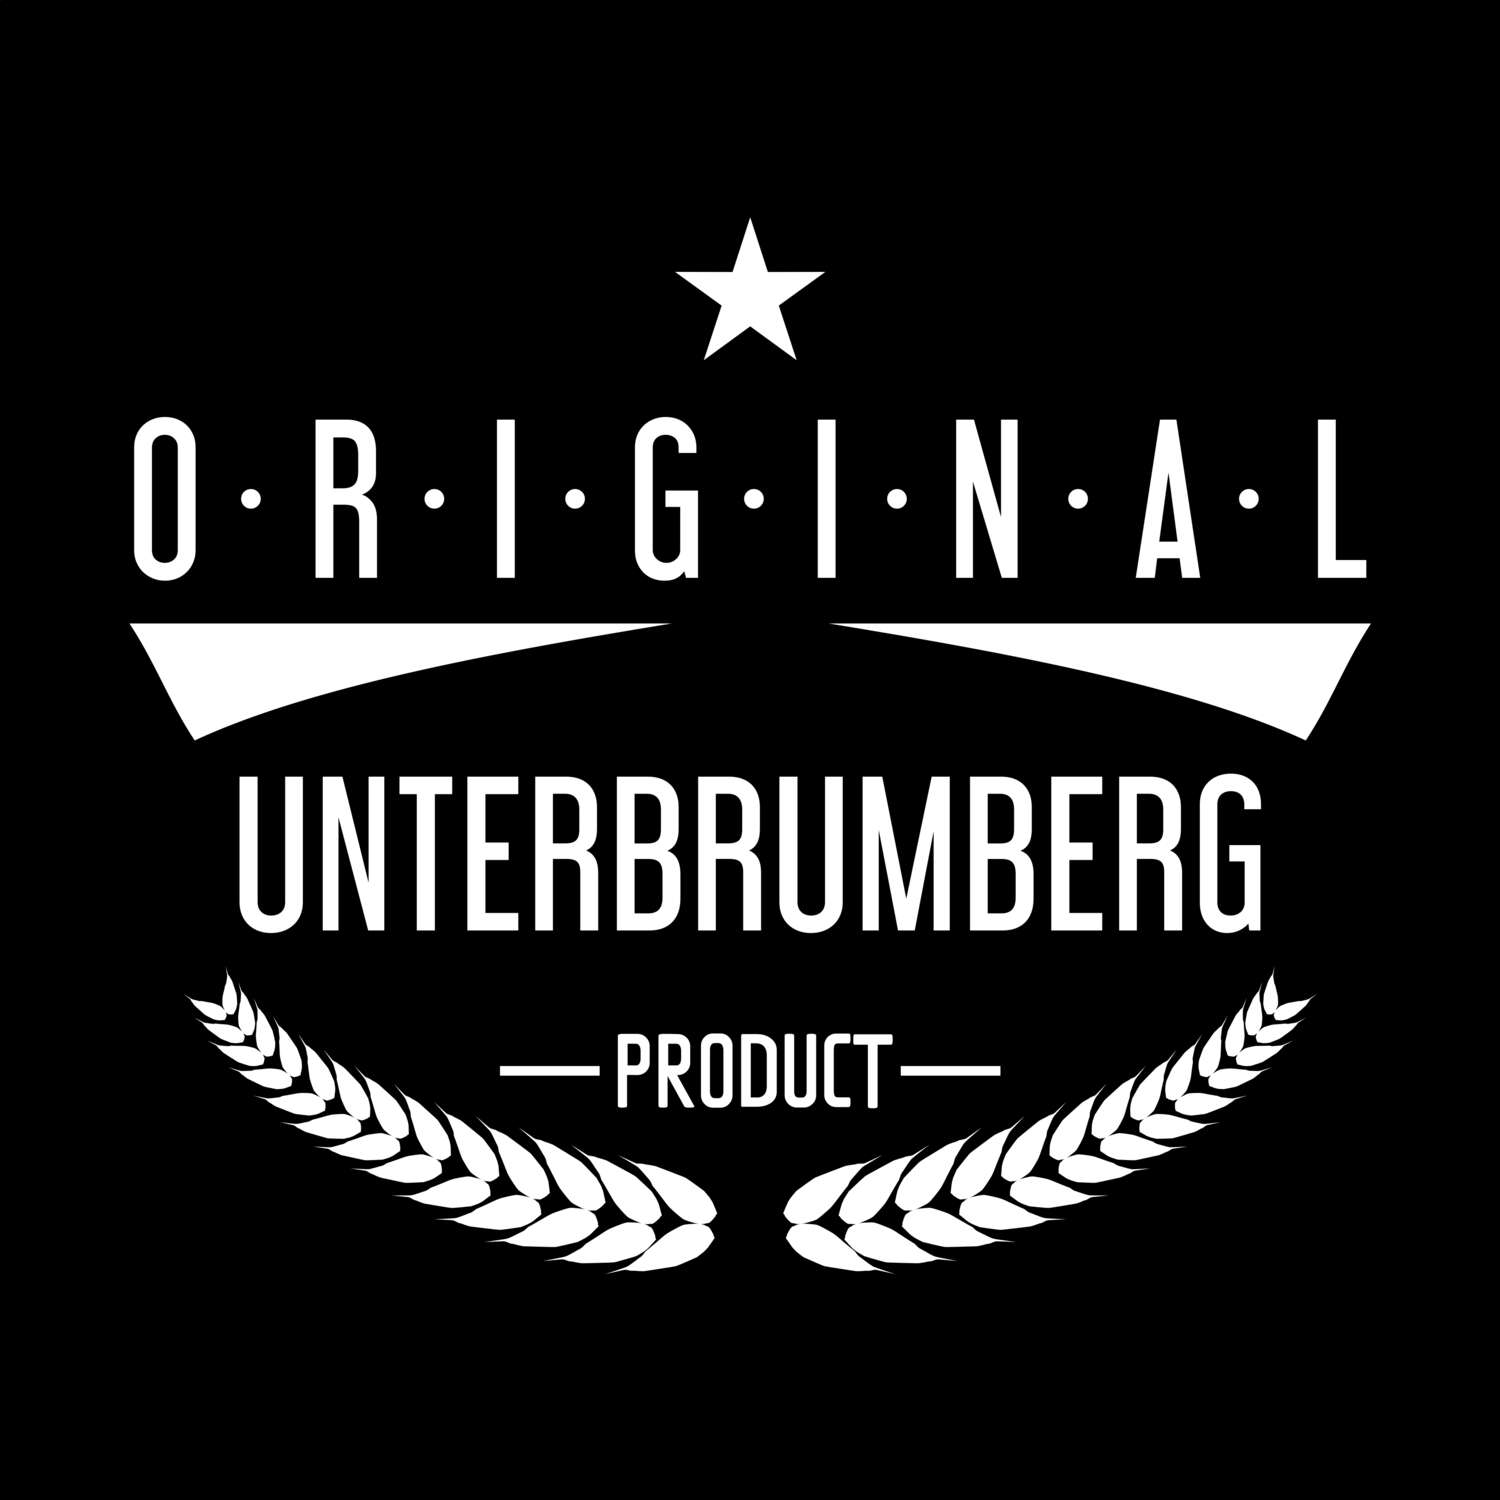 Unterbrumberg T-Shirt »Original Product«